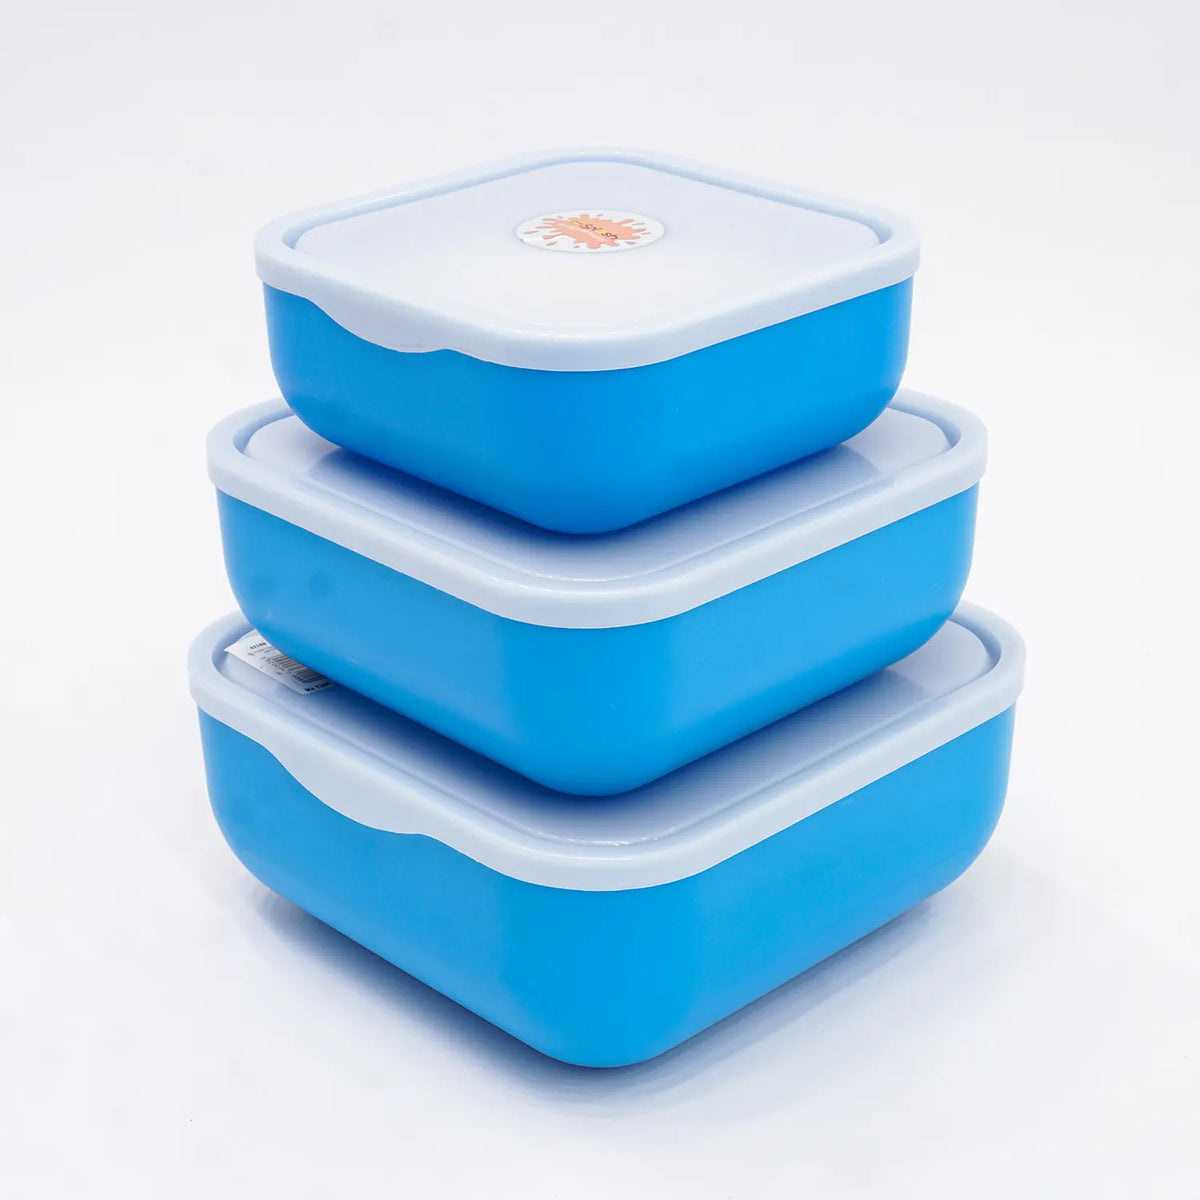 Convenient Set of 3 Eco-Friendly Plastic Food Storage Boxes: Simplify Your Kitchen Organization